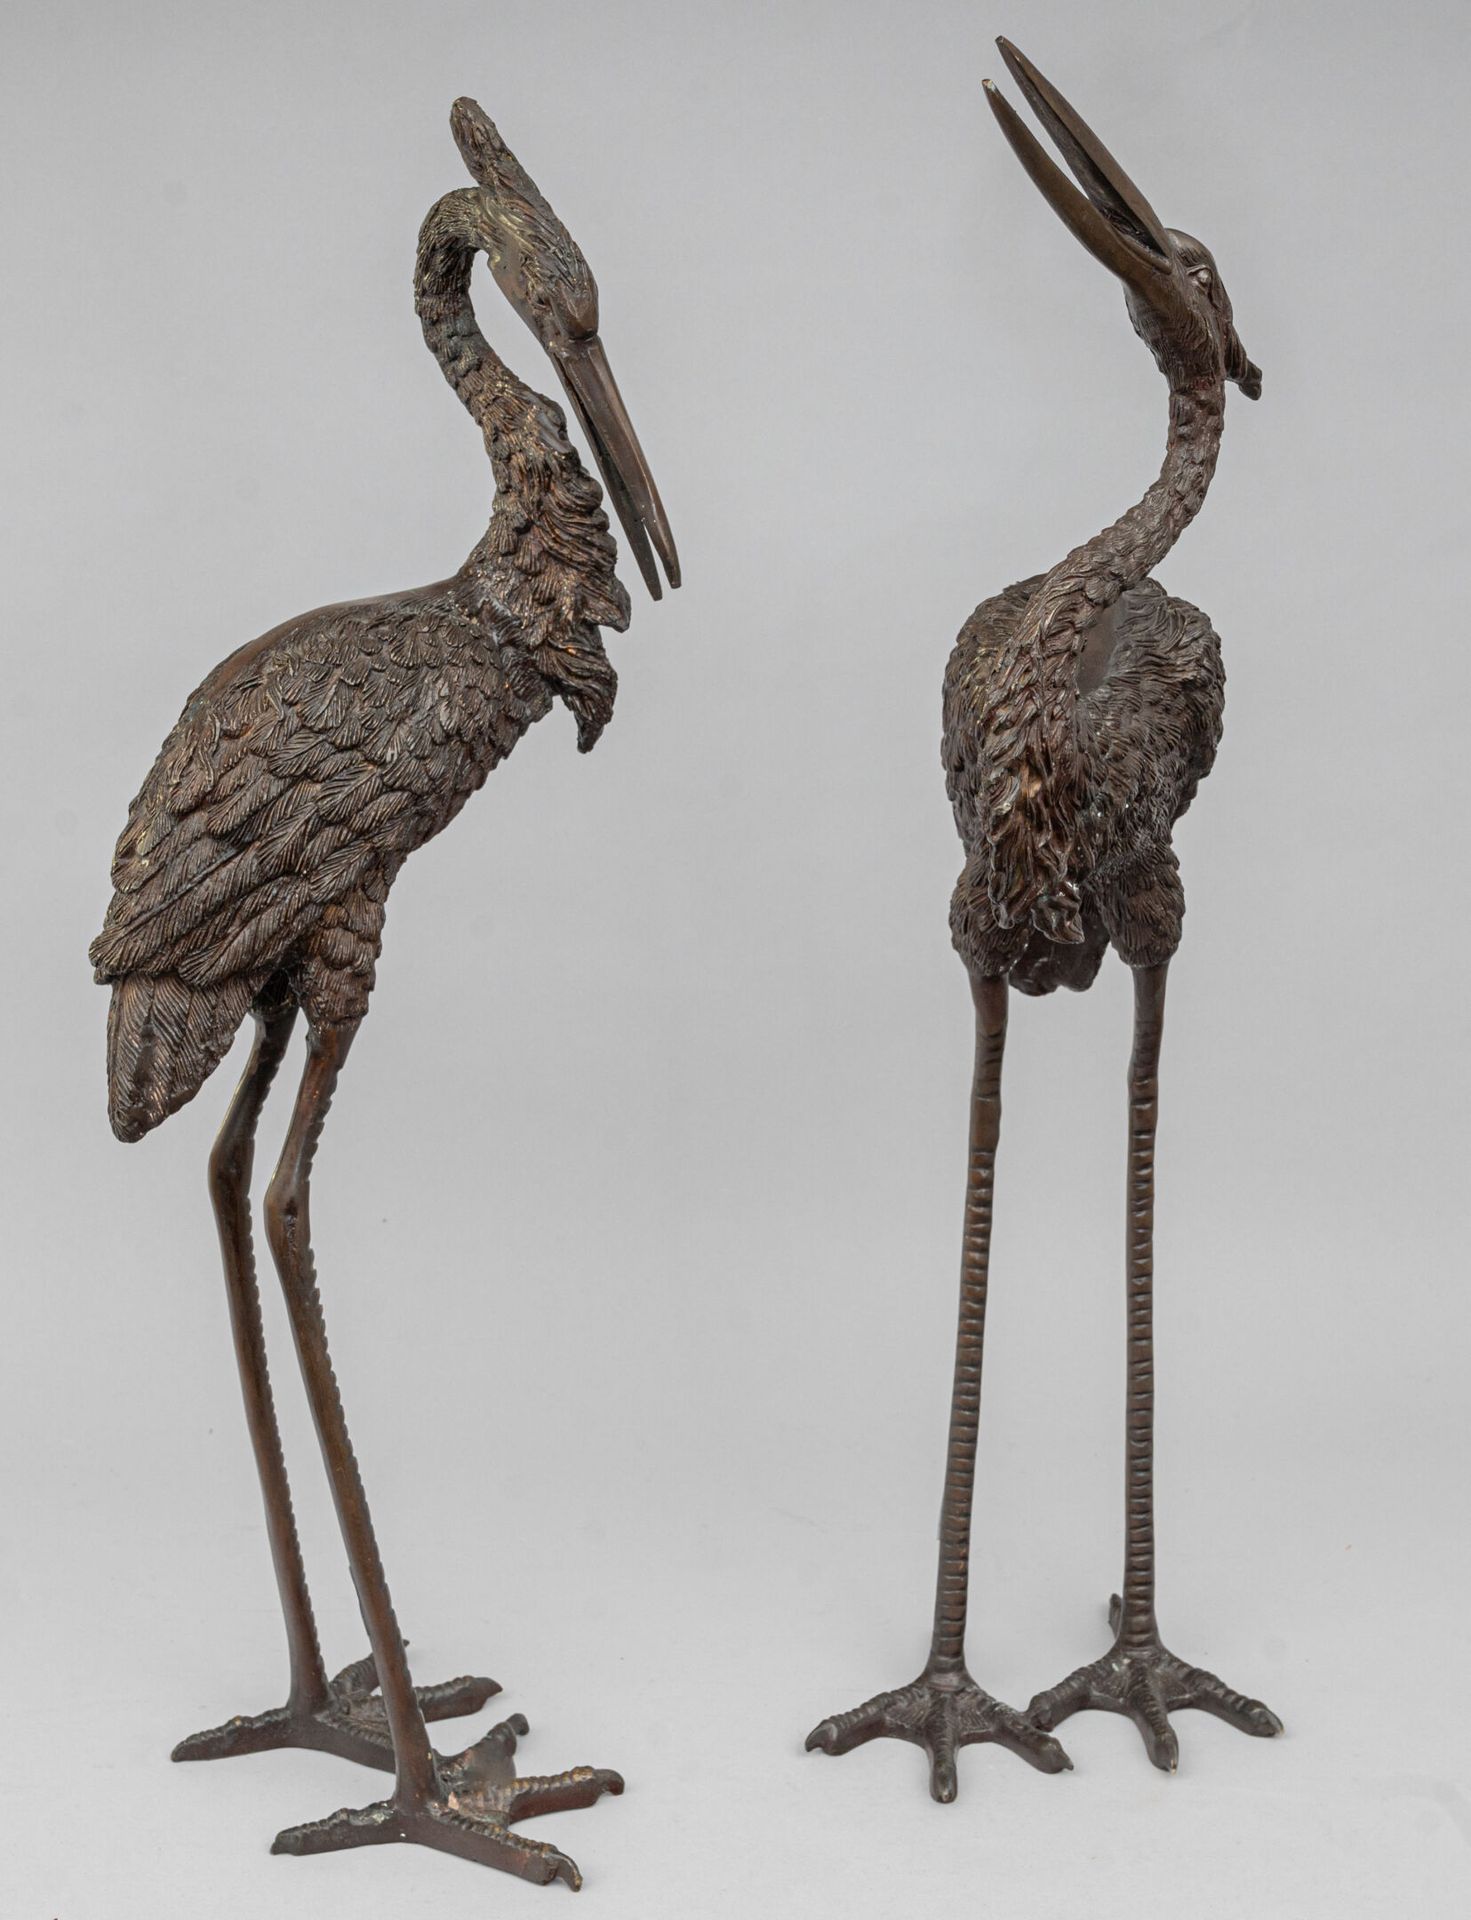 Null 一对铜鹤，日本，20 世纪早期
高脚站立，张嘴，一只昂首向天，另一只低头，漆黑色。有轻微磕碰和缺口。
H.79 厘米